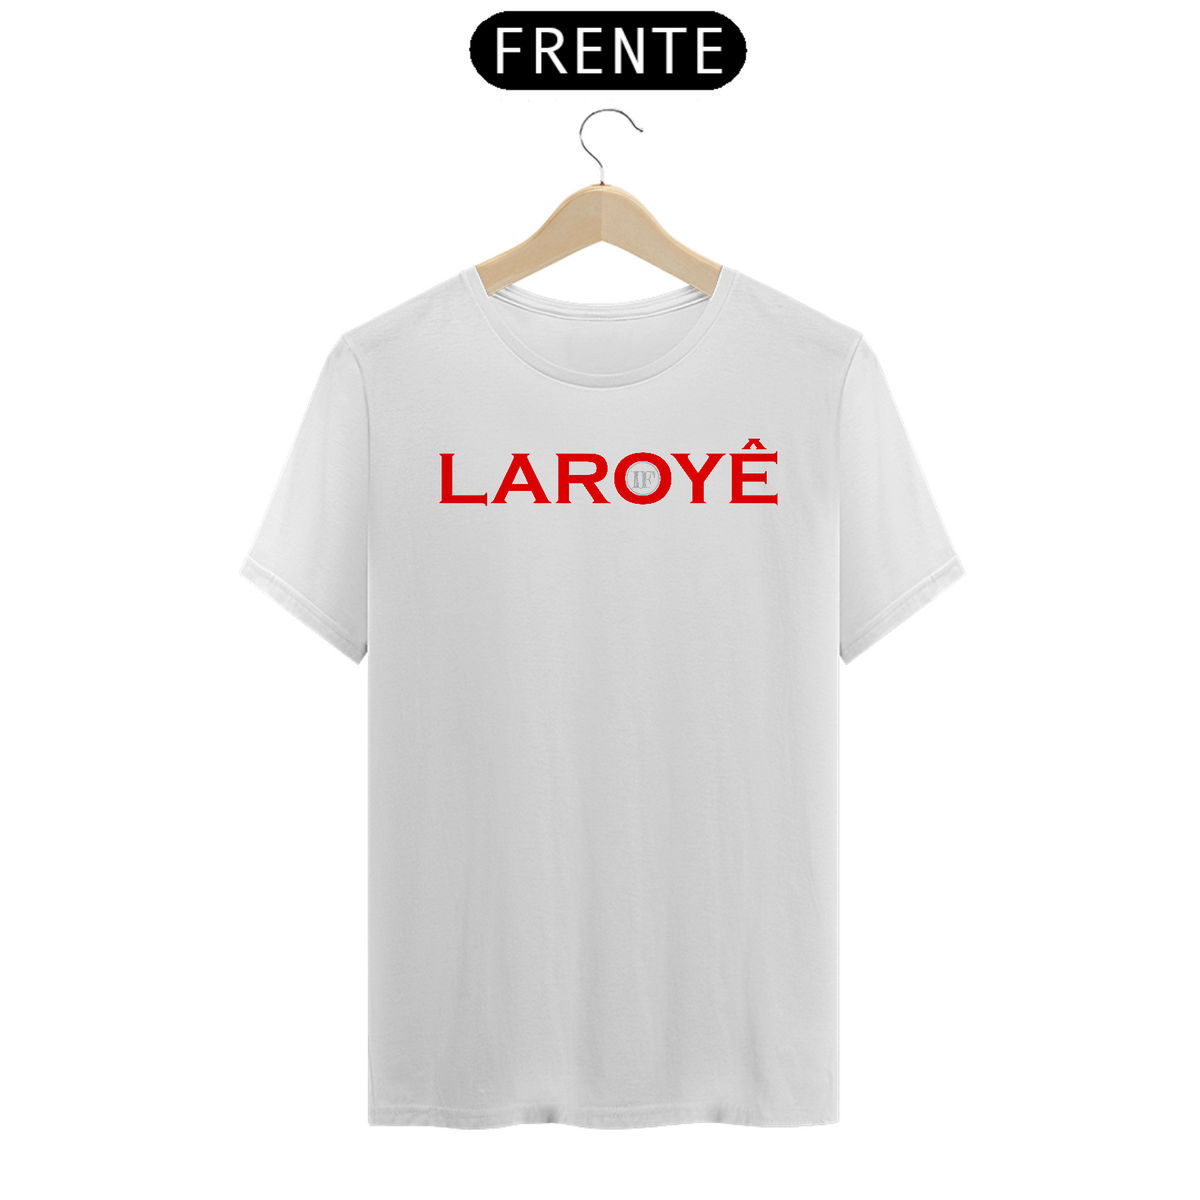 Nome do produto: Camiseta LAROYÊ